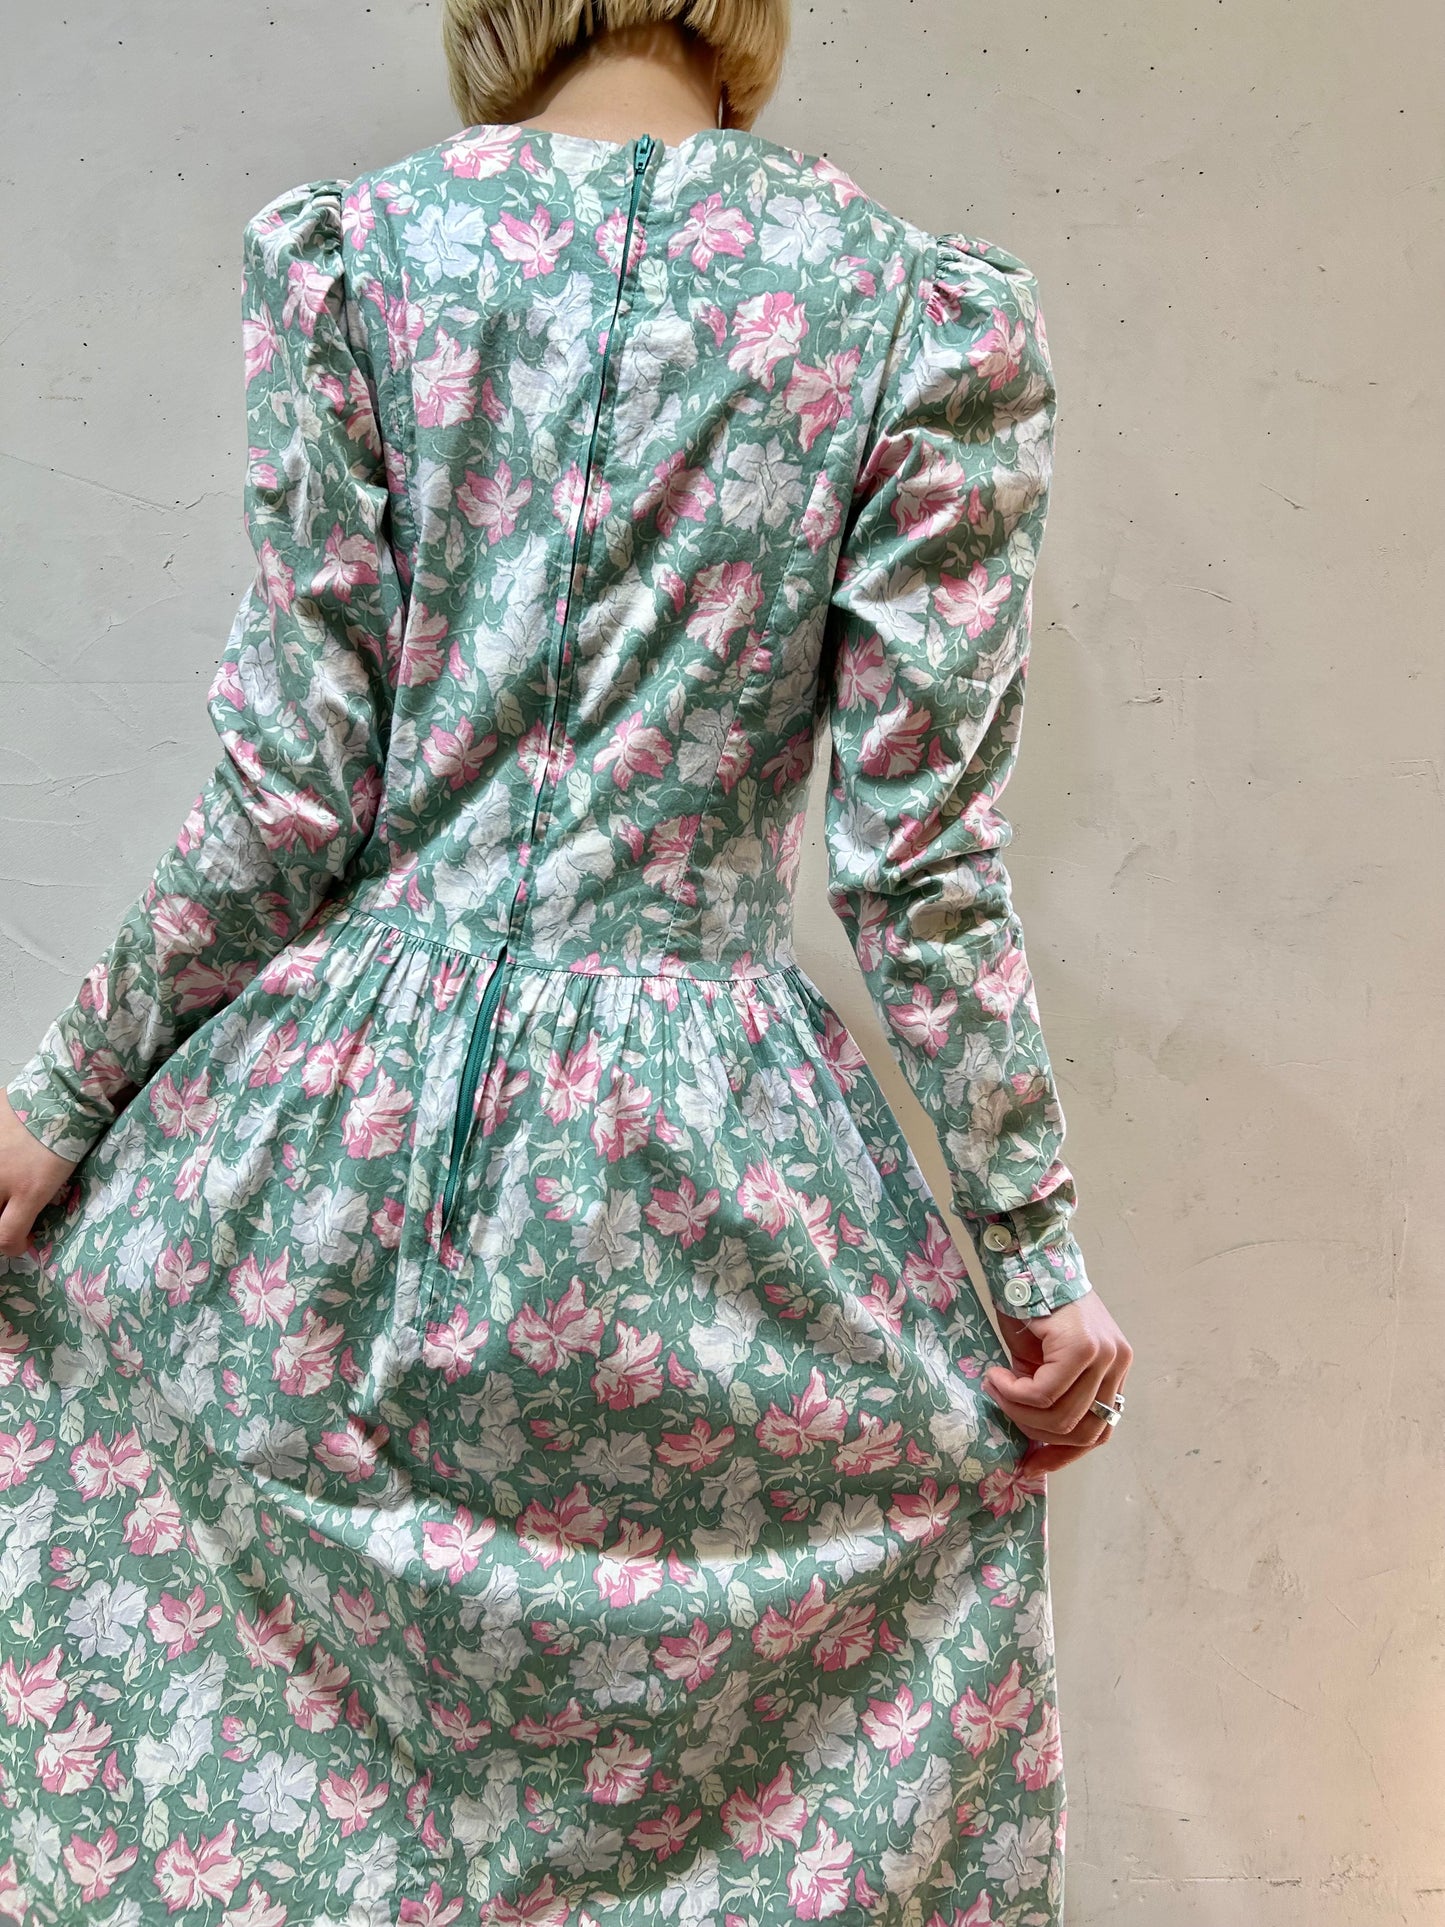 Vintage Flower Dress 〜Laura Ashley〜 [E27059]